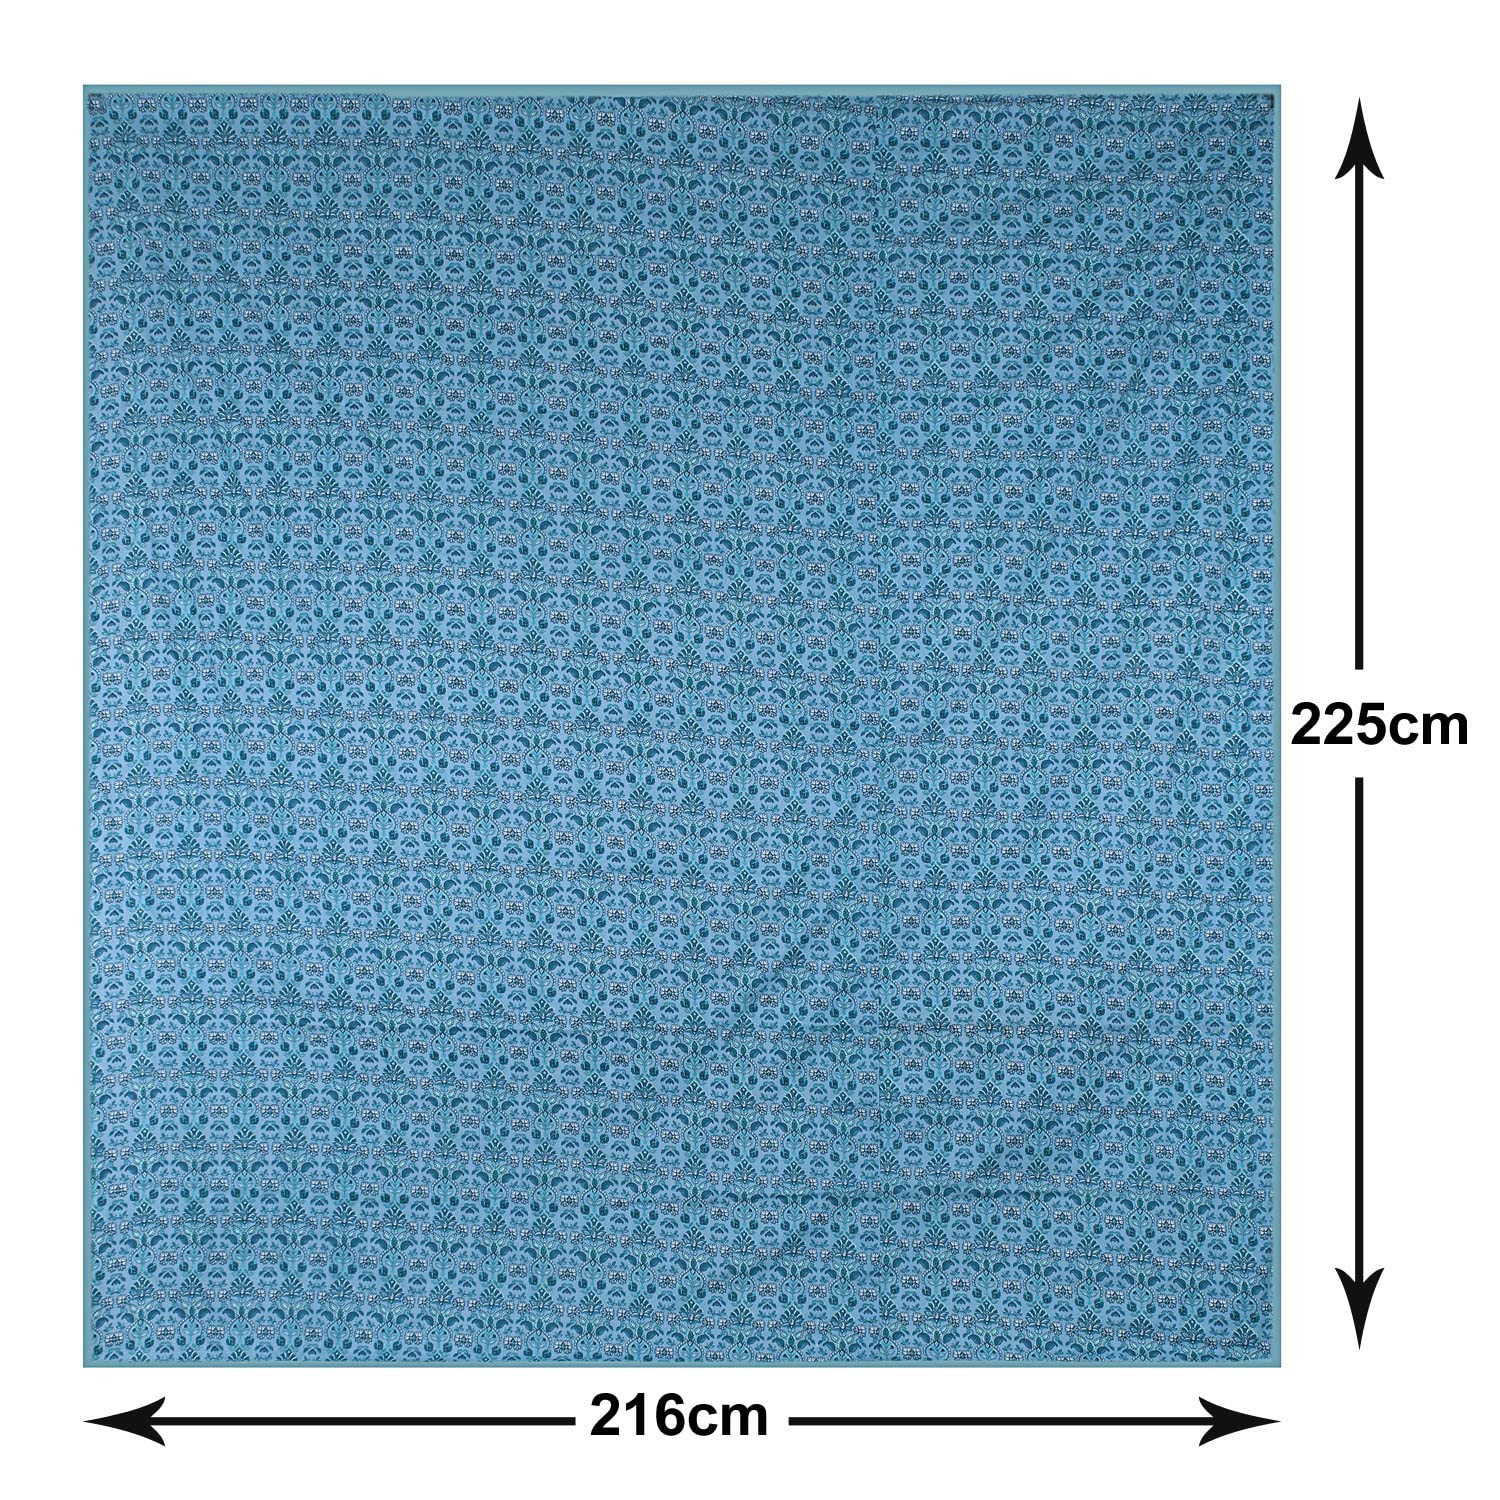 Kuber Industries Blanket | Cotton Double Bed Dohar | Blanket For Home | Reversible AC Blanket For Travelling | Blanket For Summer | Blanket For Winters | Carry Print | Green